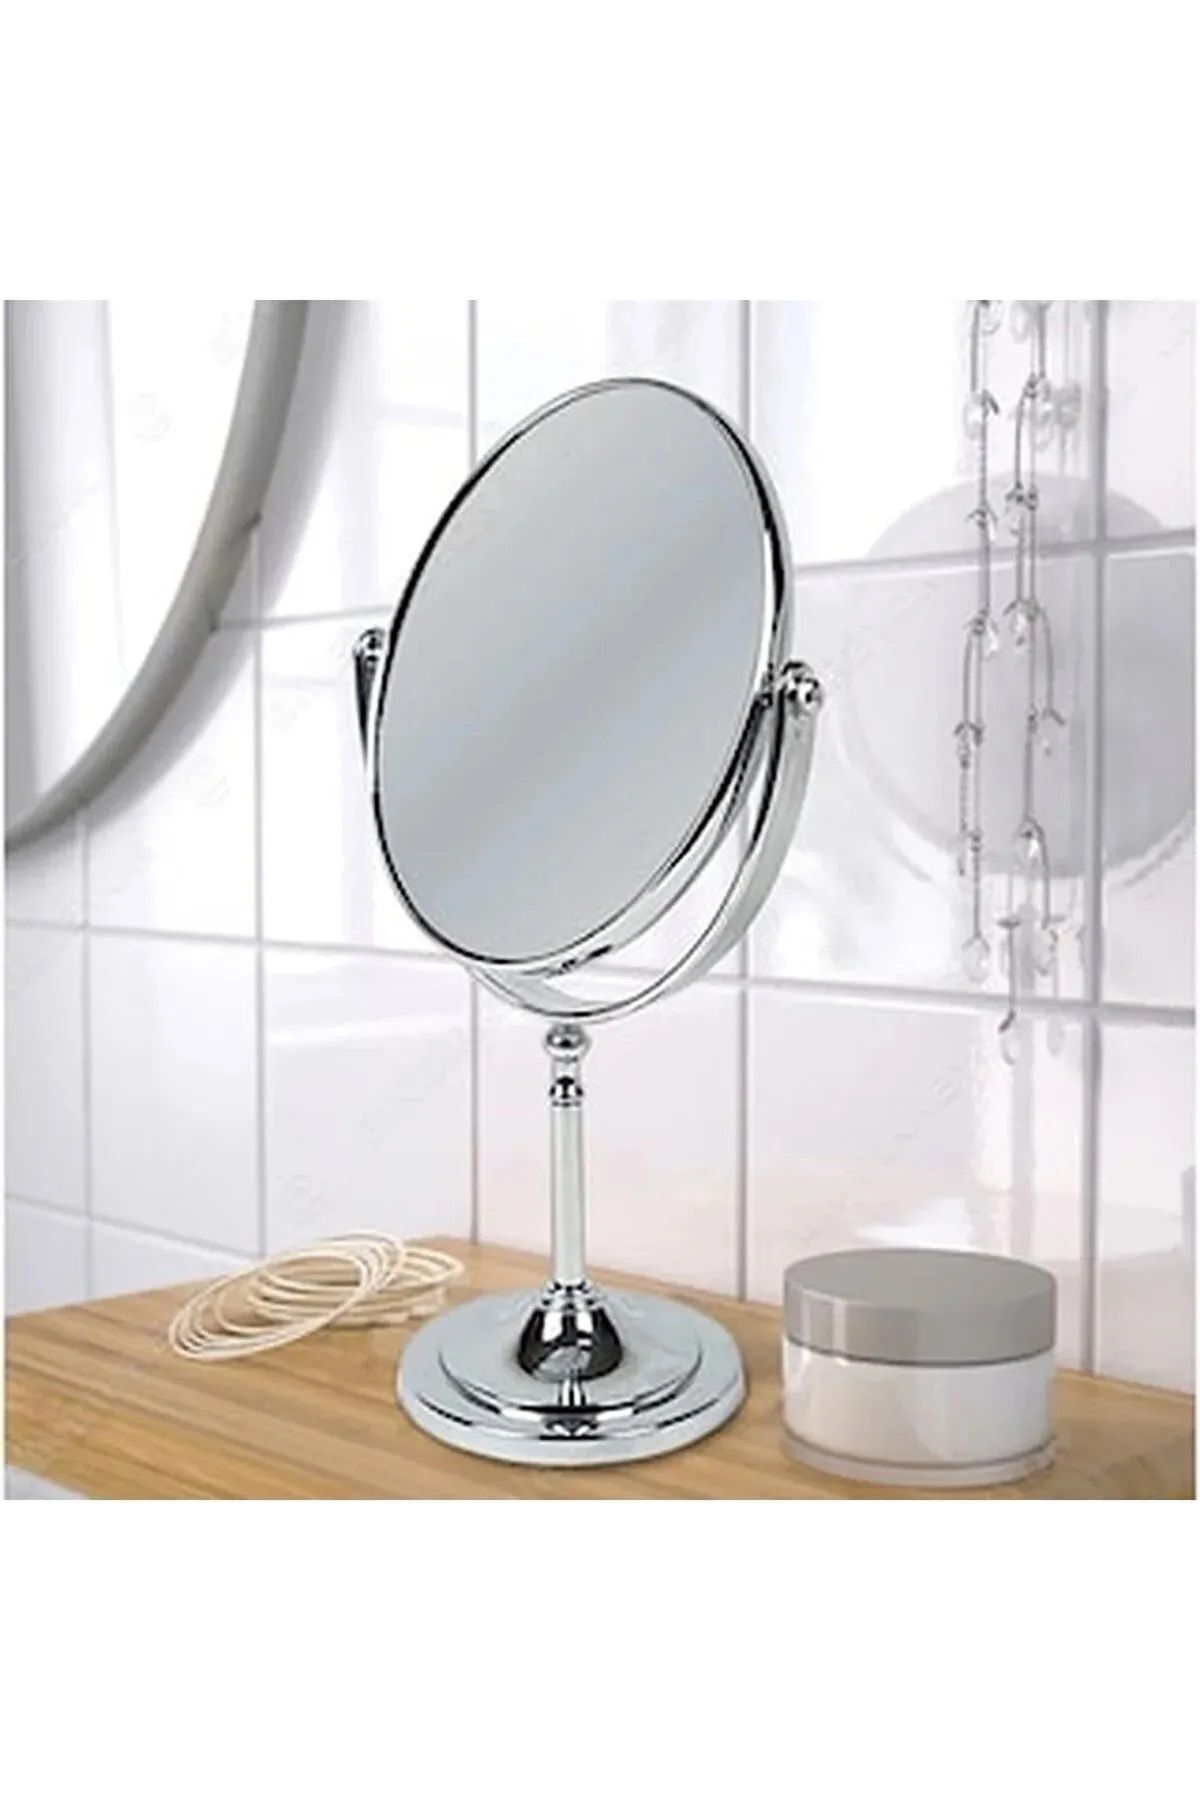 emdeco Gri Makyaj Traş Aynası Çift Taraflı Büyüteçli Büyük Boy Ayaklı Oval Ayna